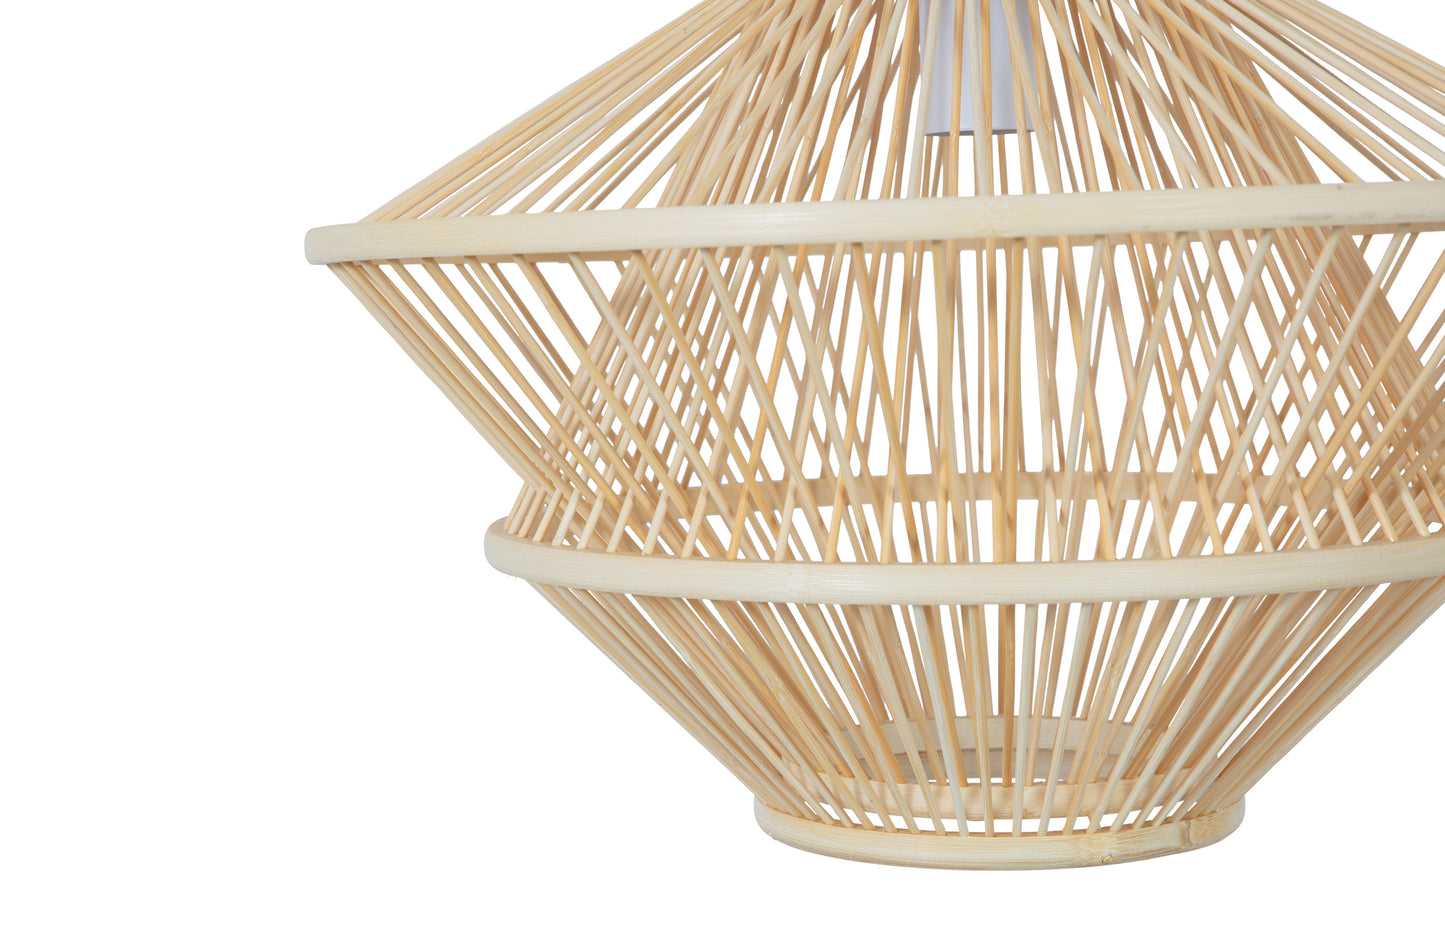 Bamboo - Loftlampe, Natural